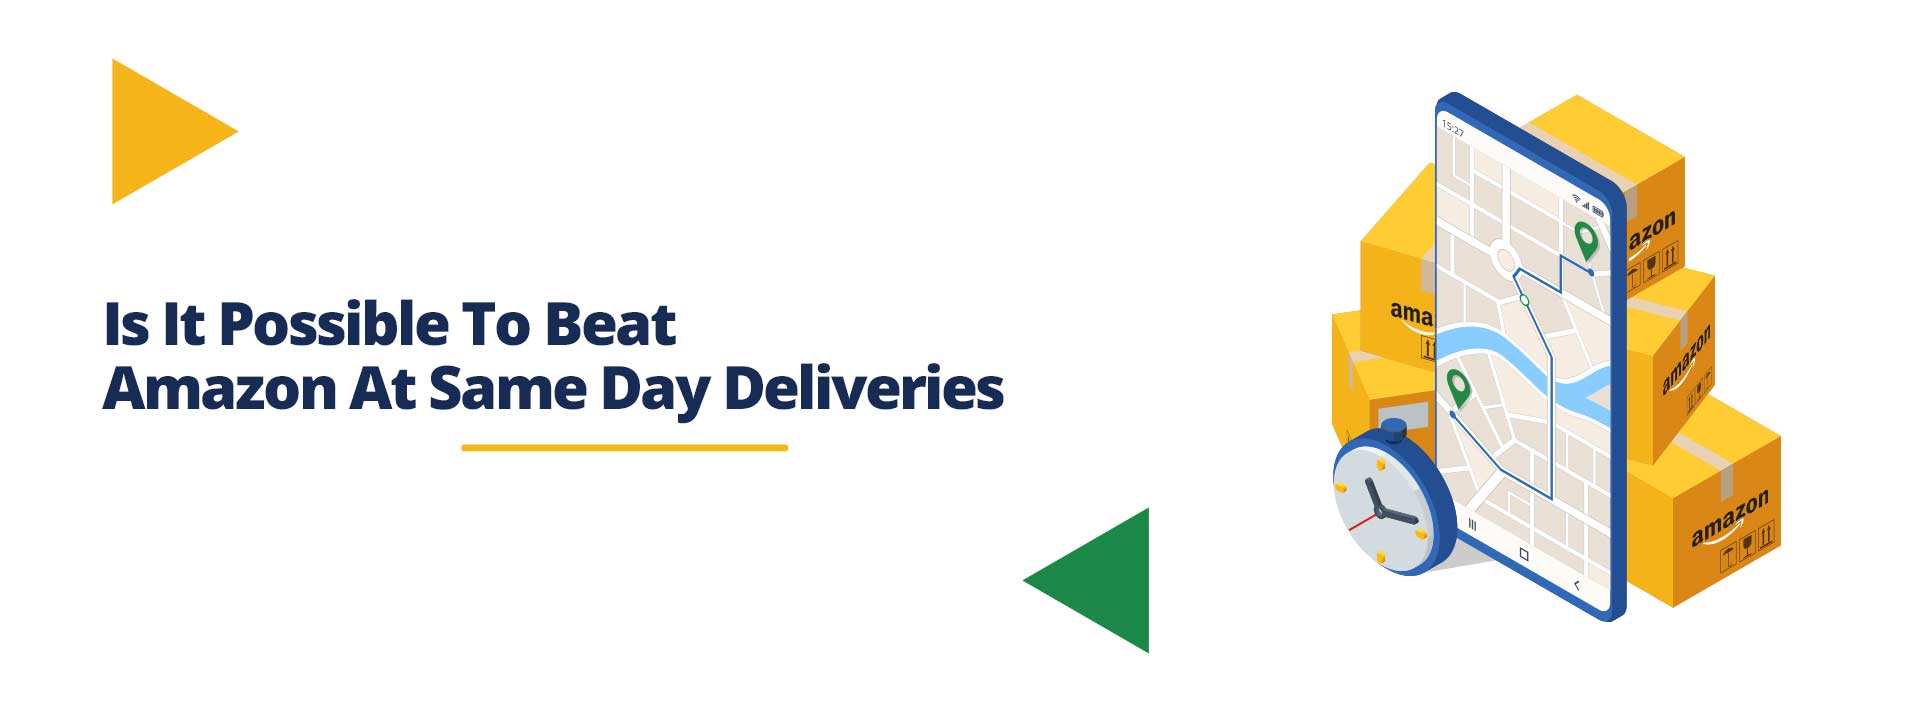 Same Day Deliveries